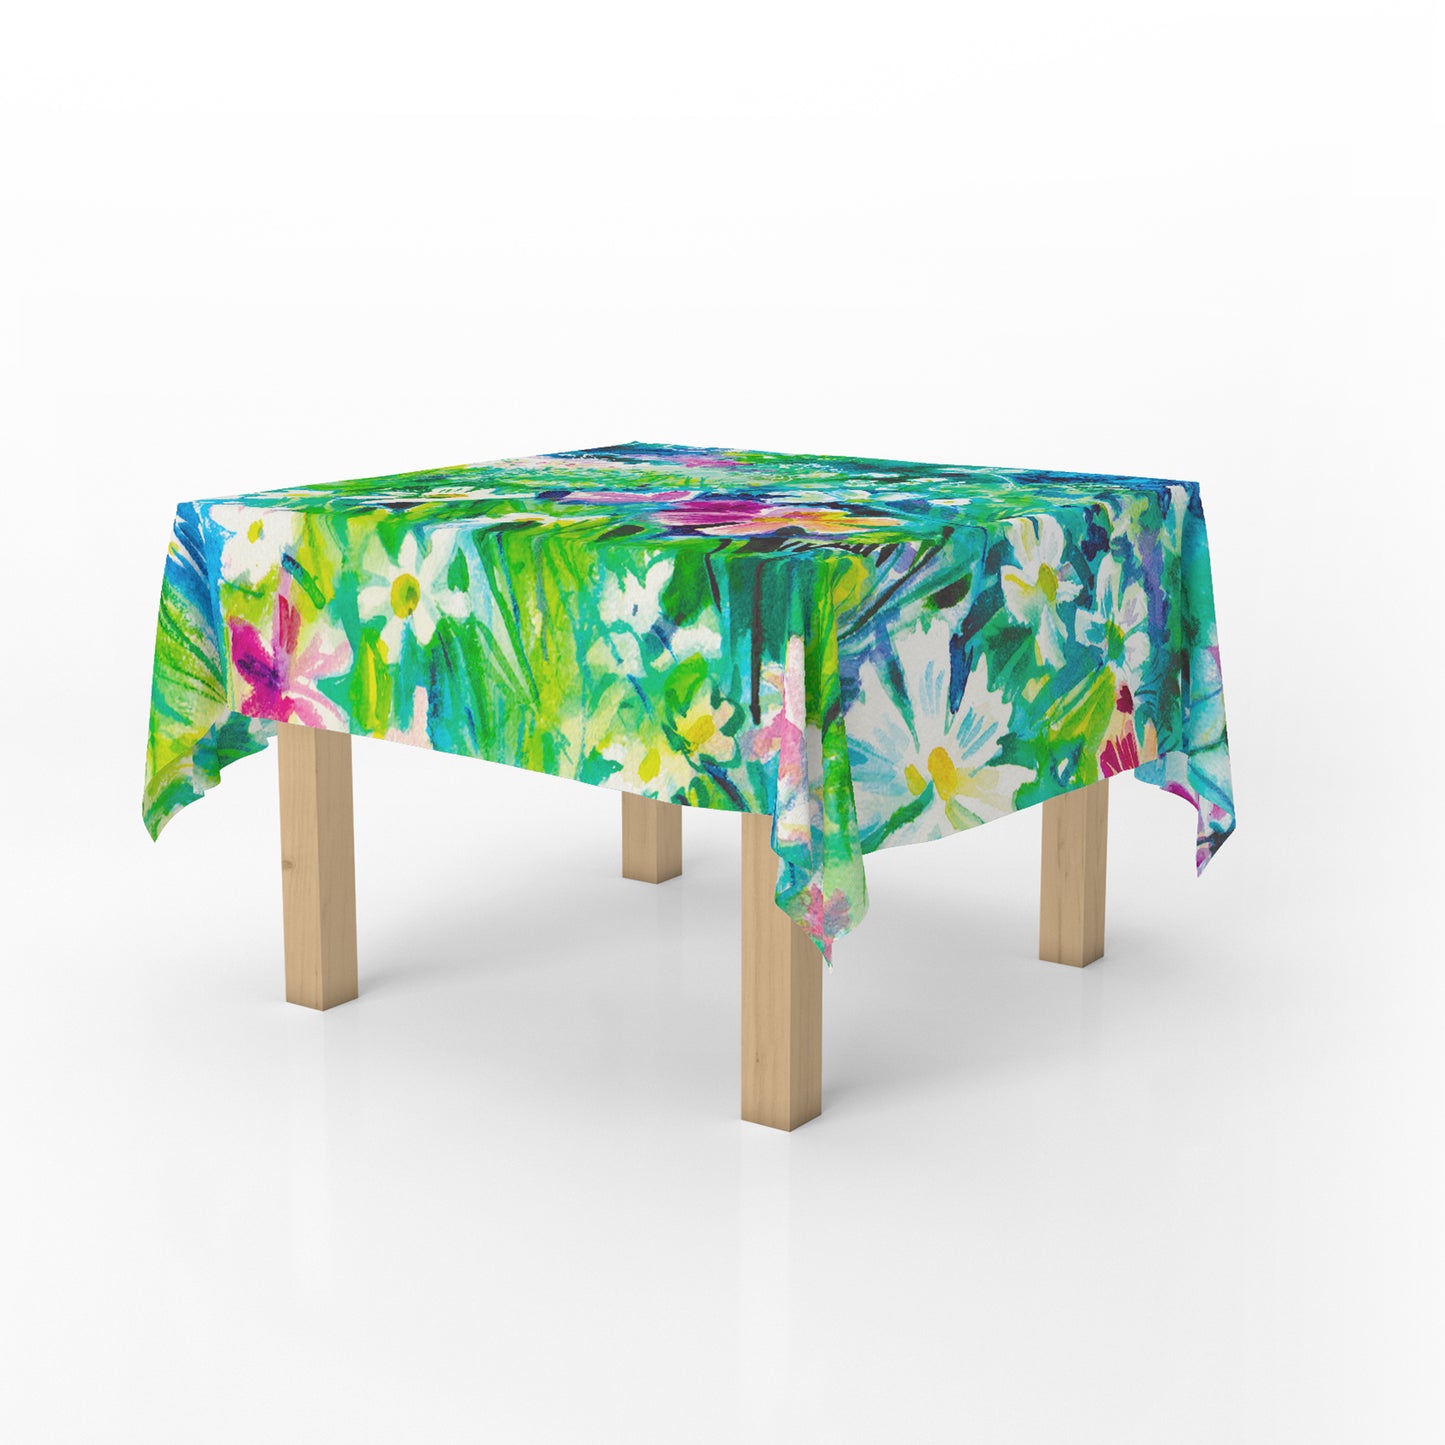 Joyful Square Tablecloth By Kristin Van Lieshout